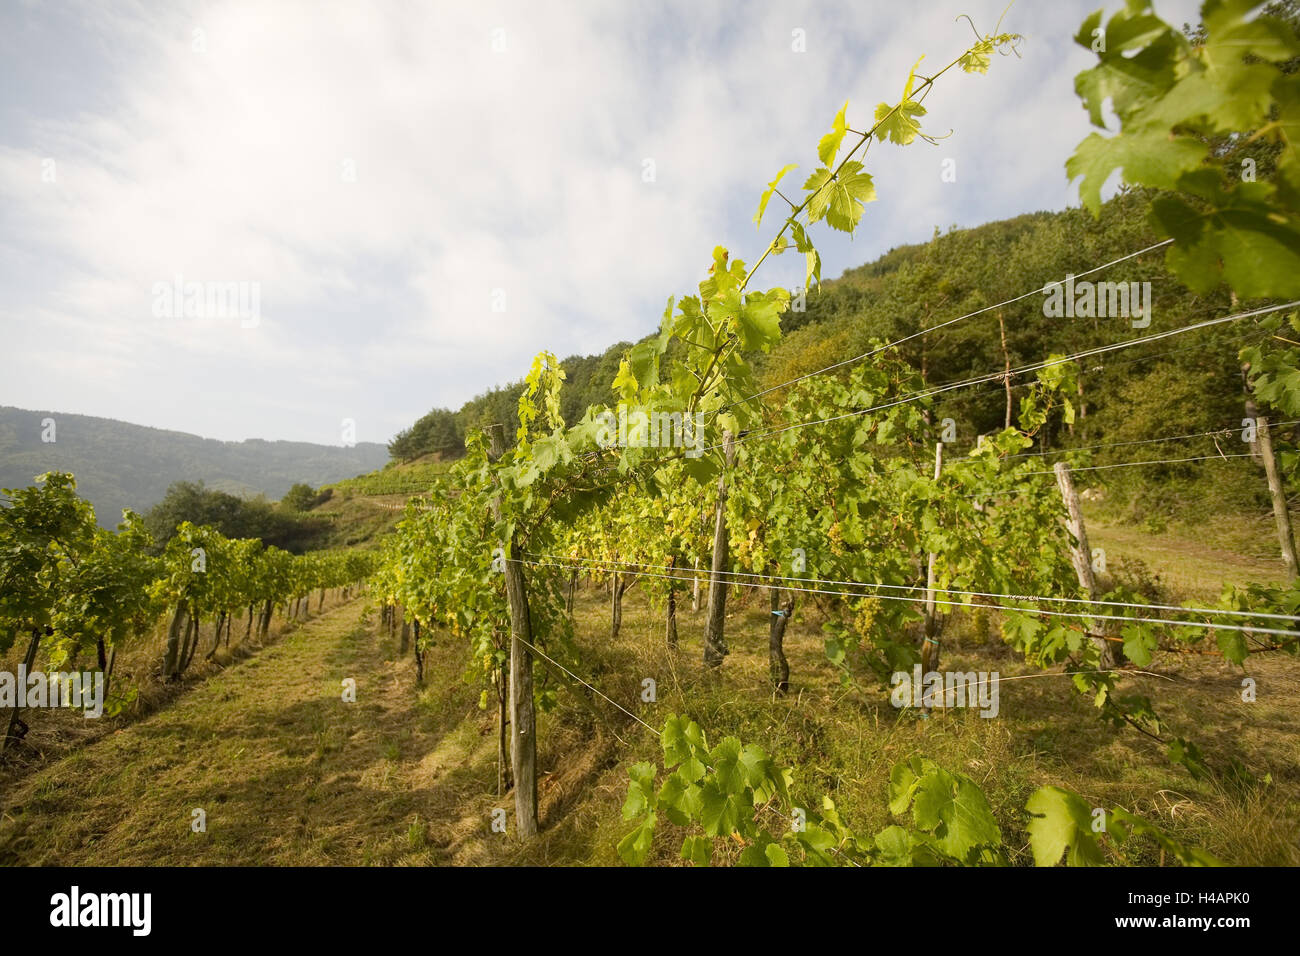 Wine-growing region of Wachau, Stock Photo